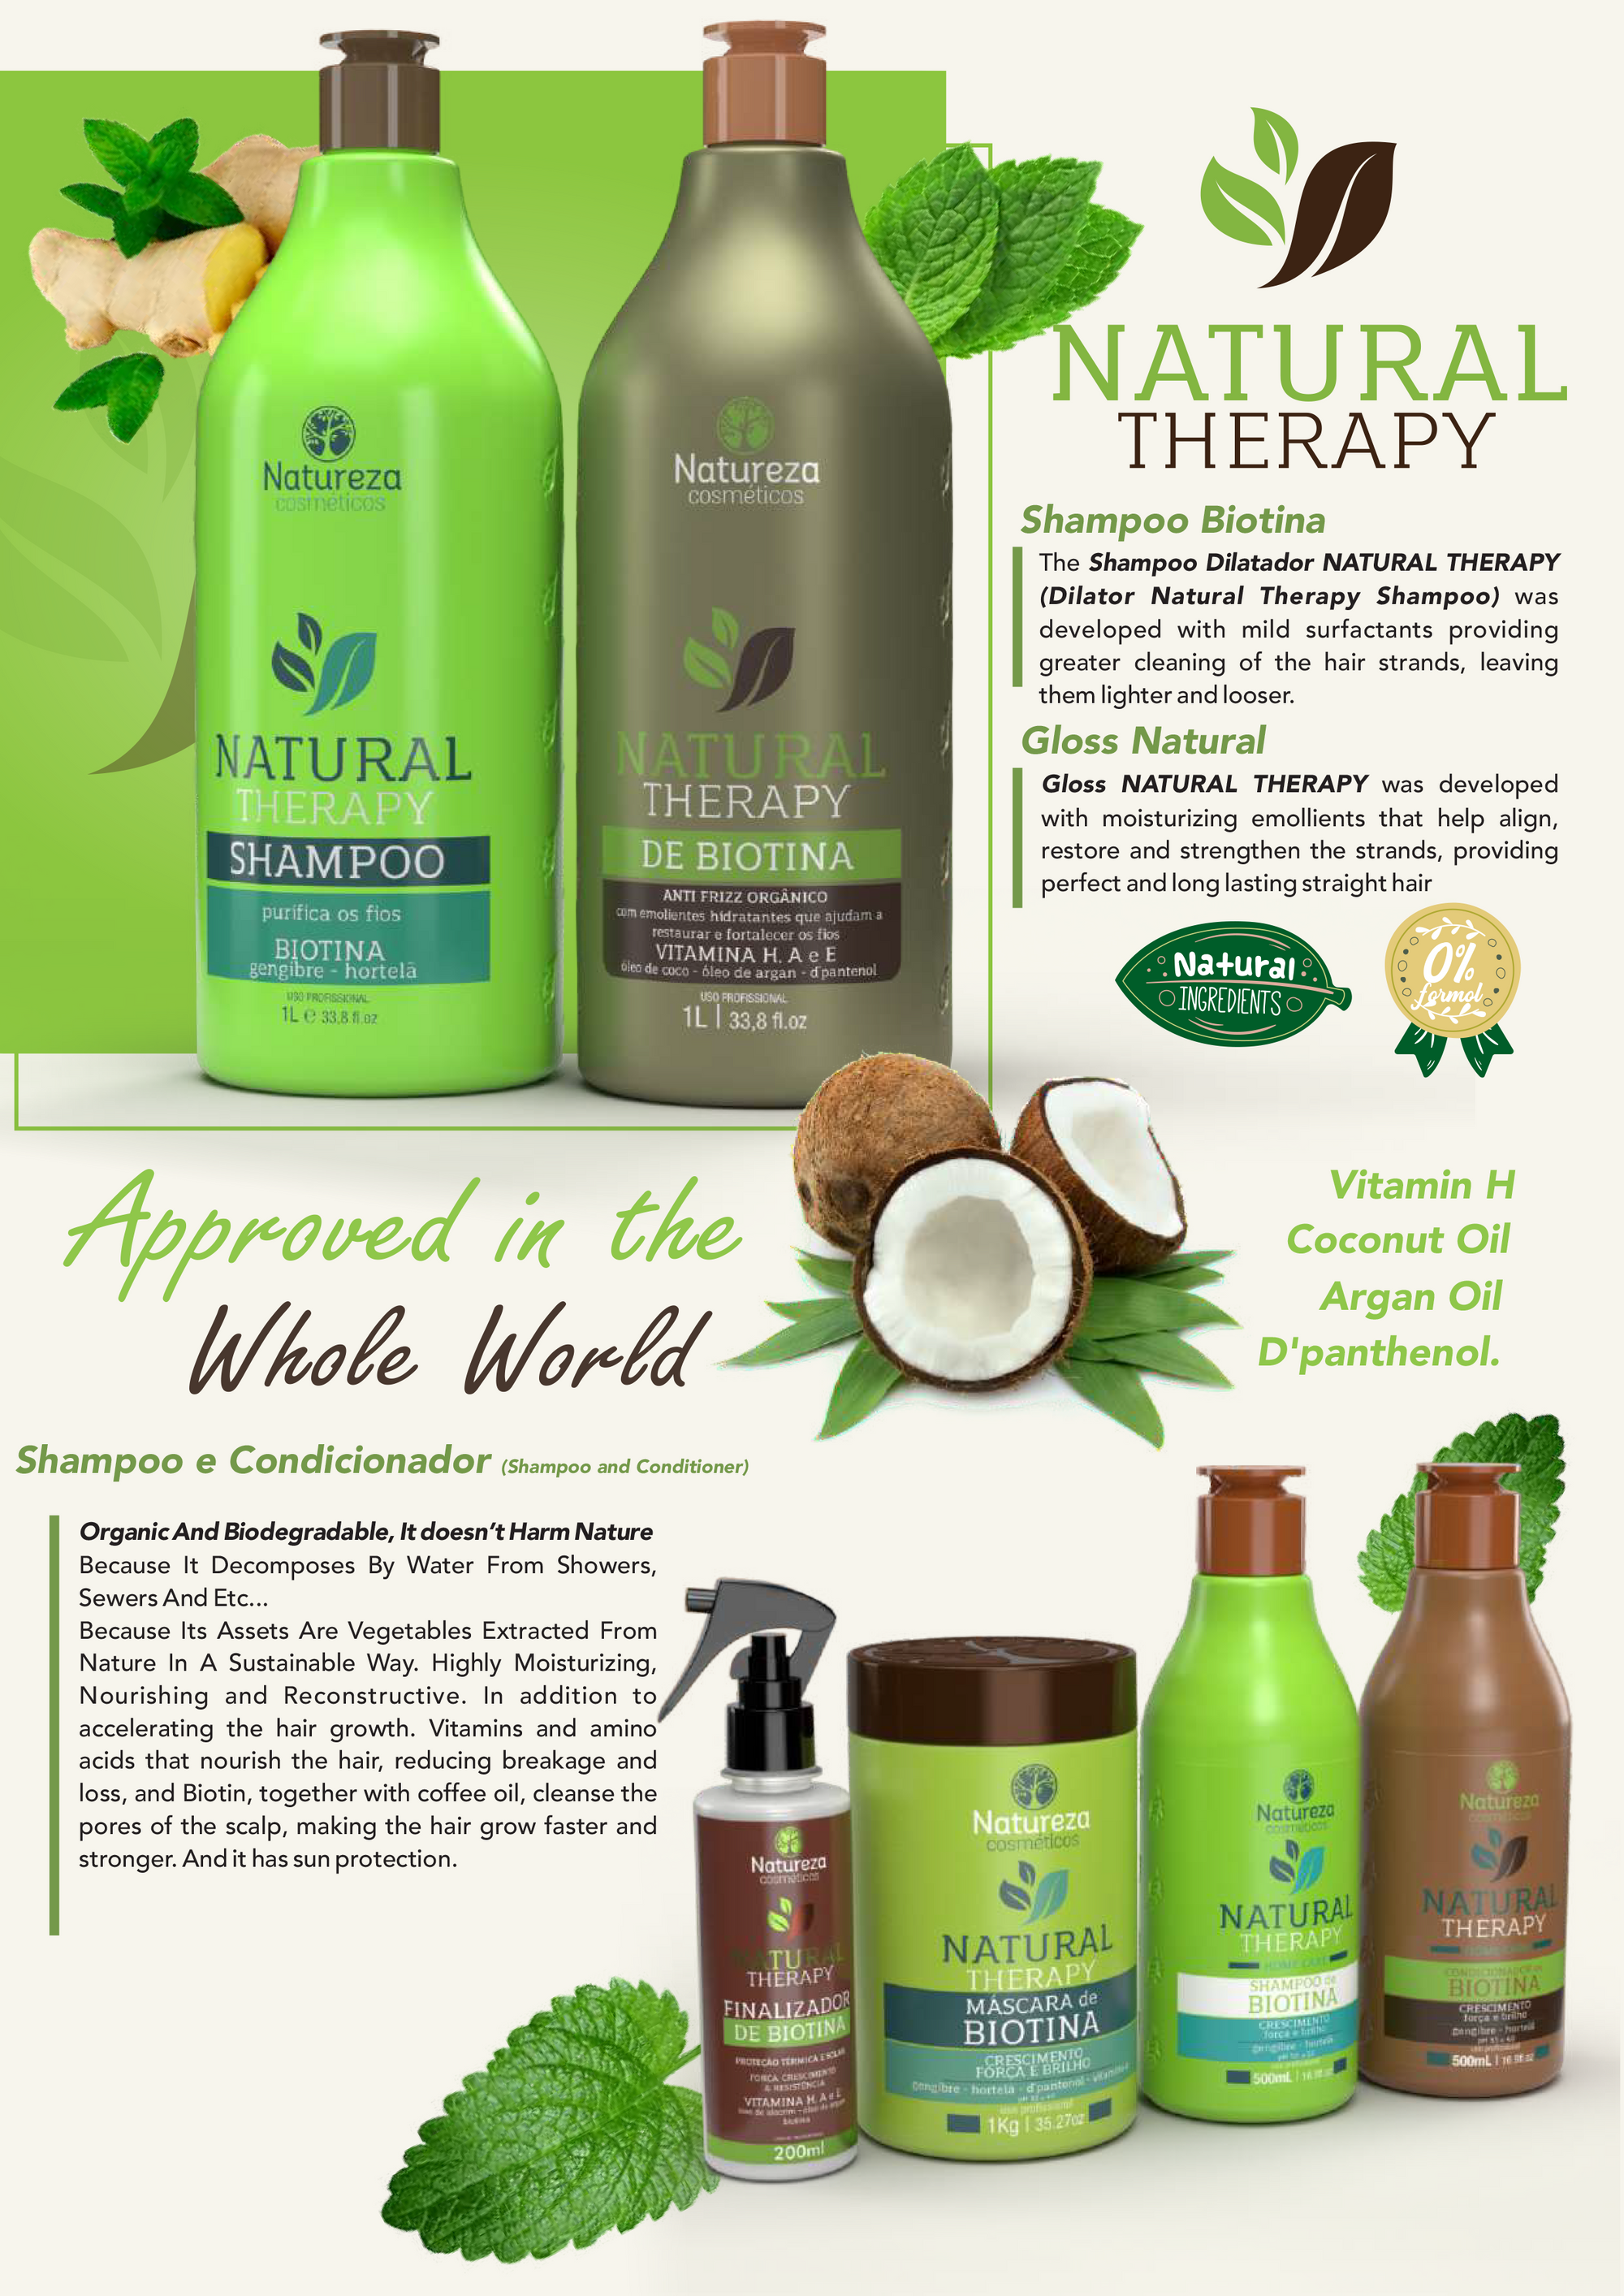 Natural Therapy Collection - Natureza USA